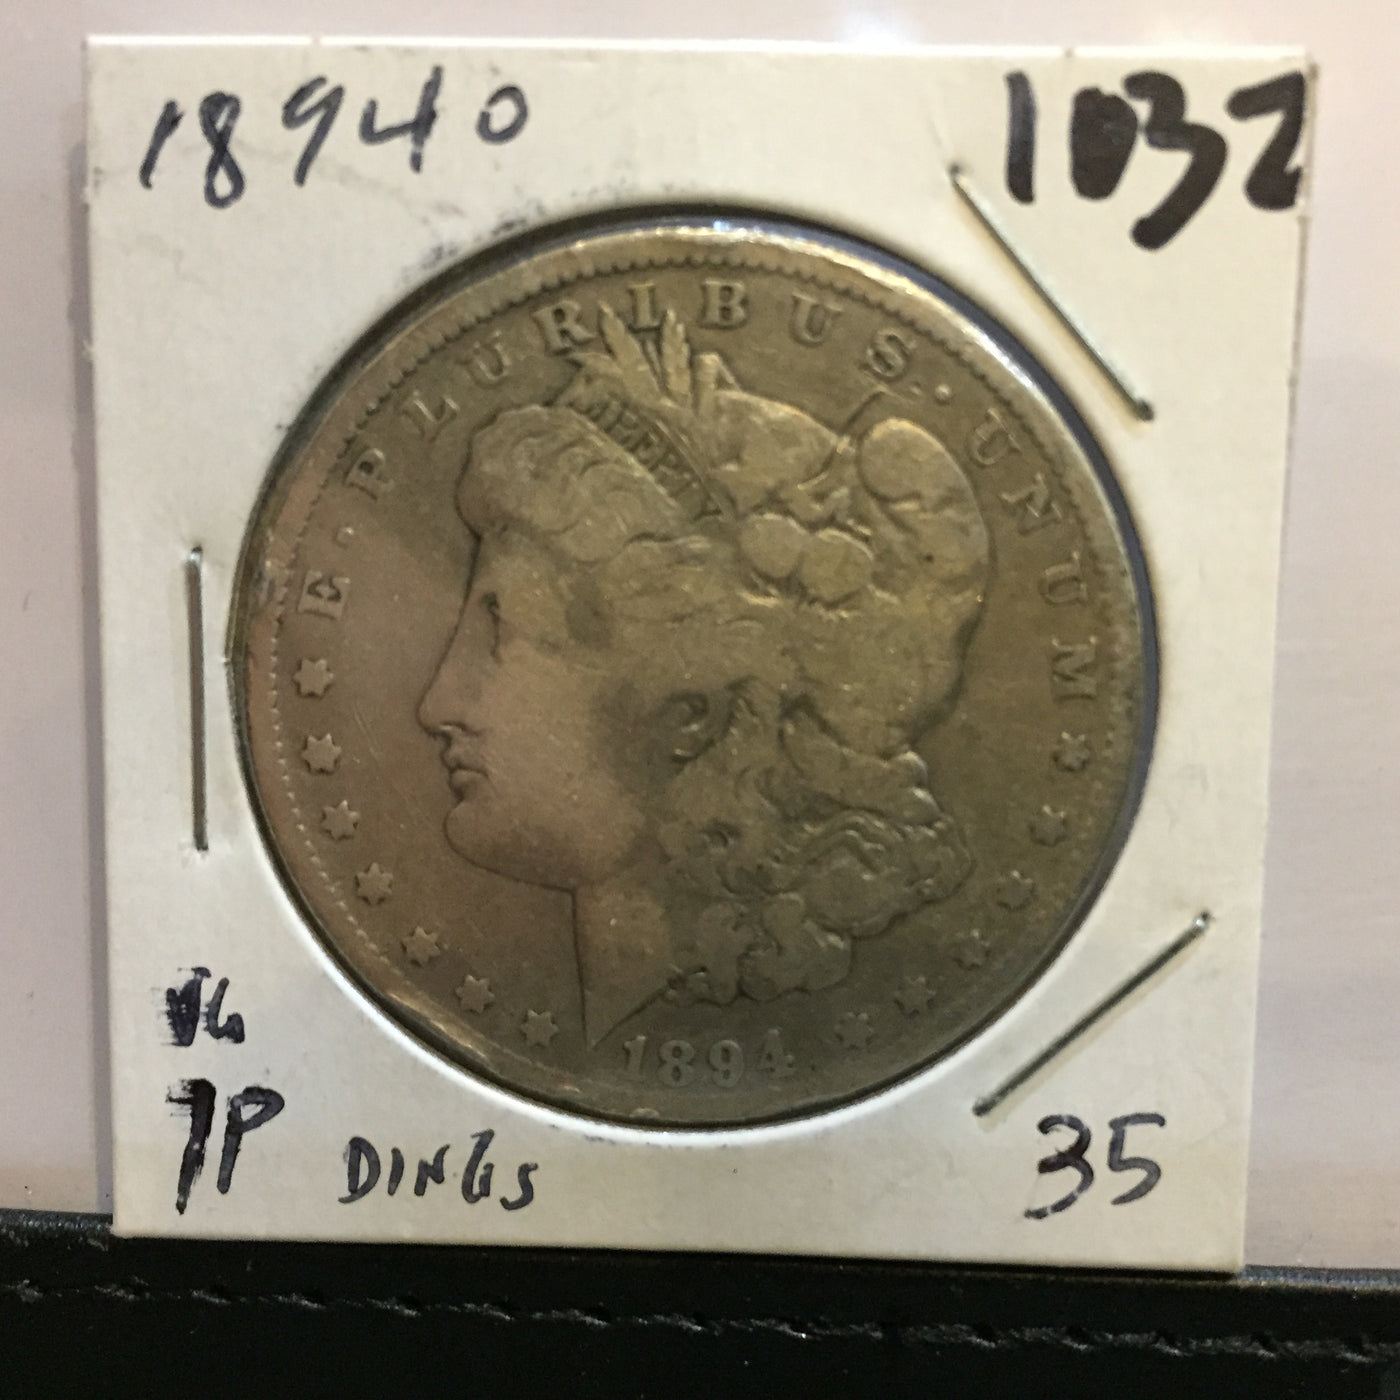 Morgan Dollar 1894 O VG Silver Dollar Very Good New Orleans